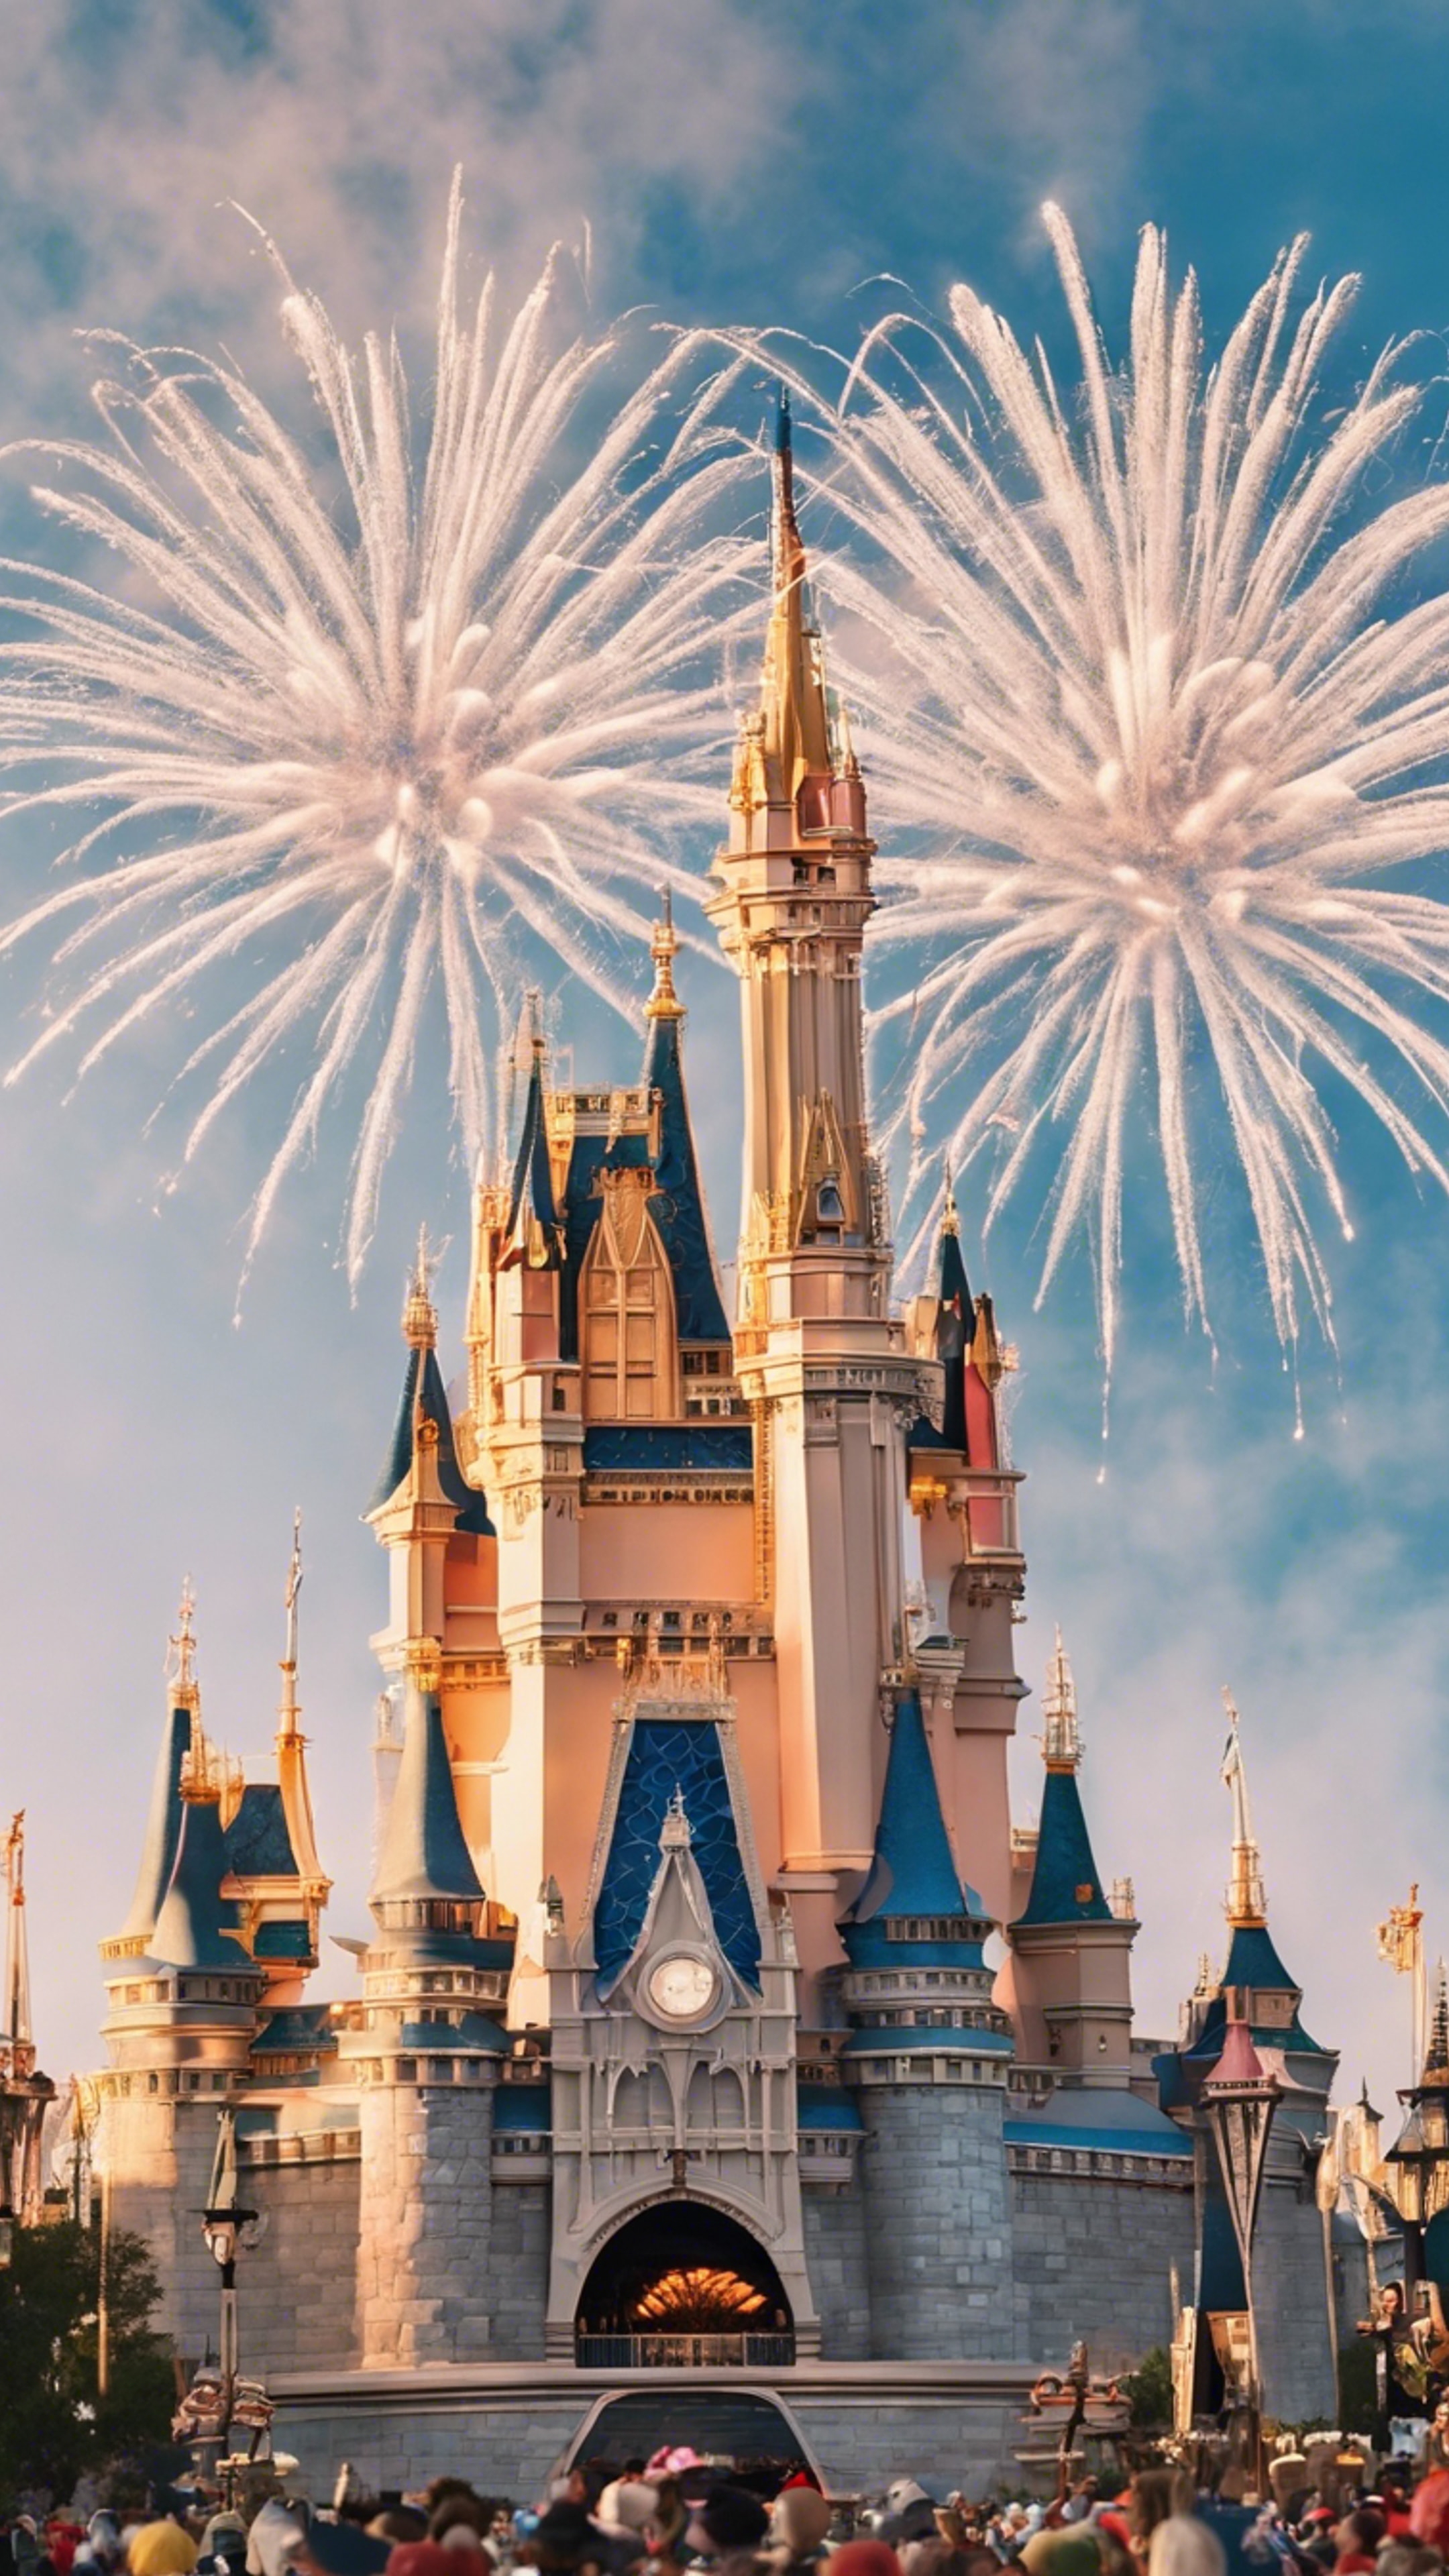 A dazzling firework display over Disney's Magic Kingdom, as seen from the Main Street U.S.A. Papel de parede[06ea505dccb744c89f0a]